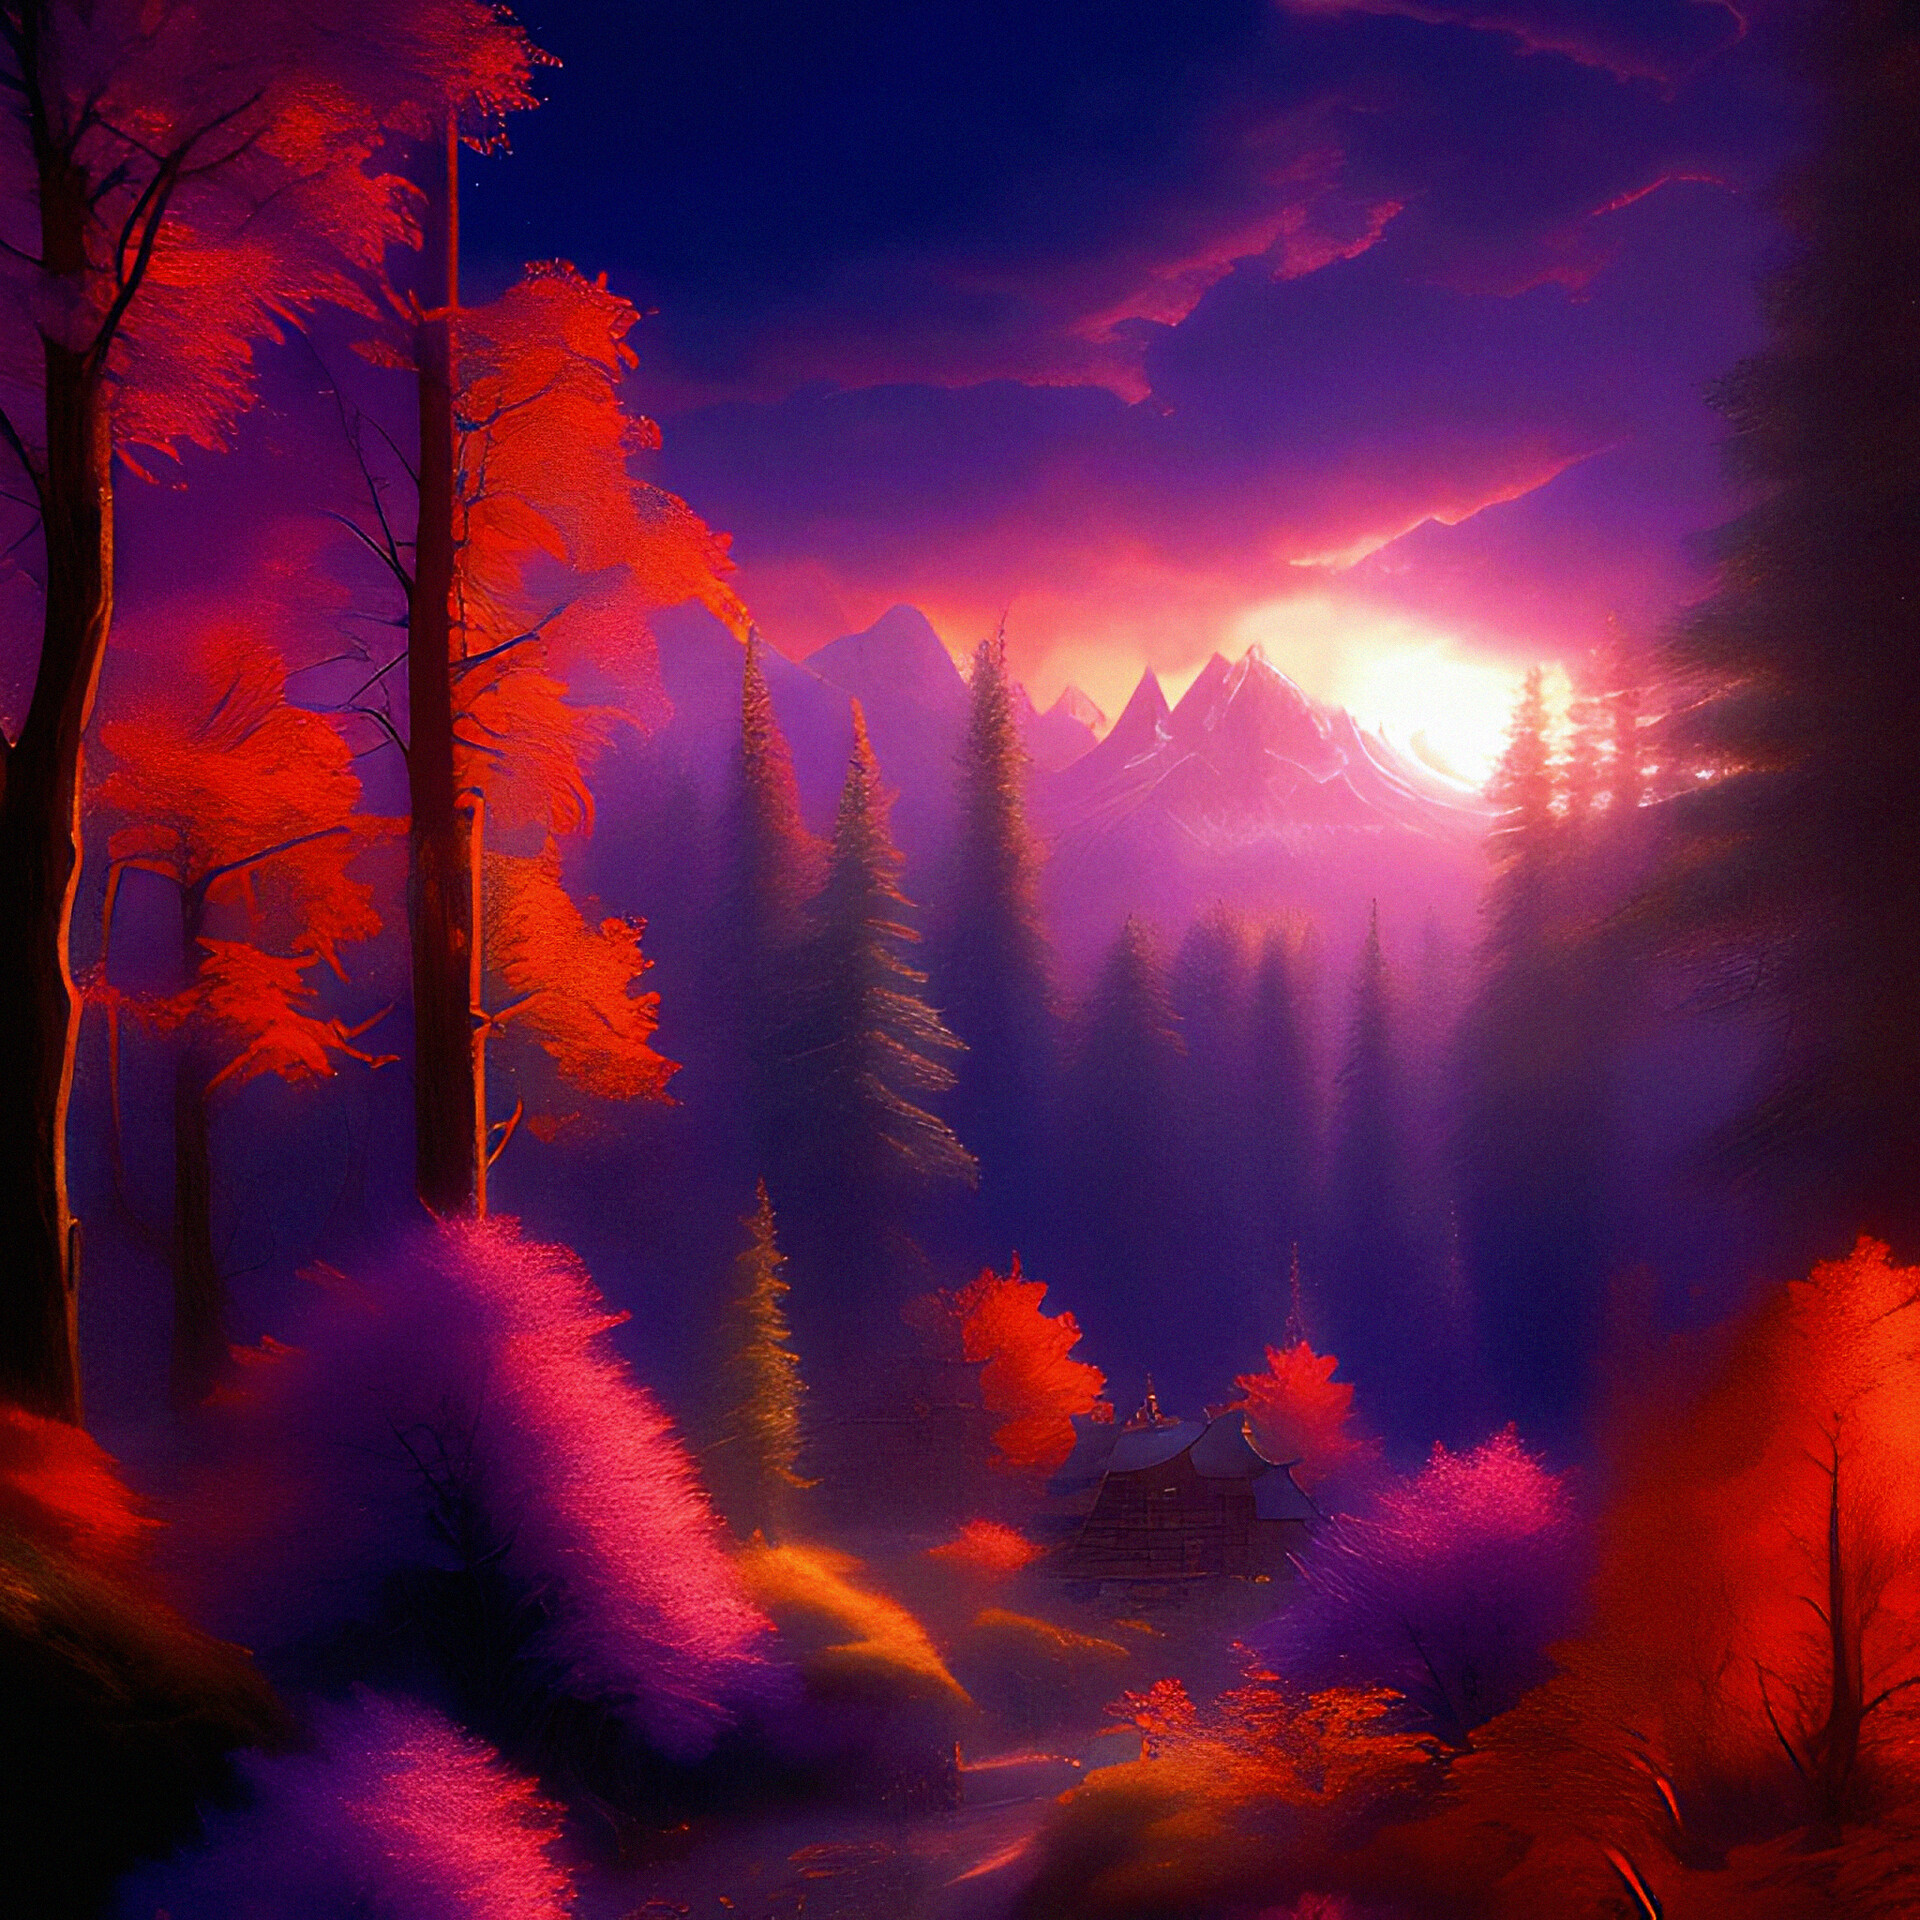 ArtStation - Forest bathed in purple and orange light